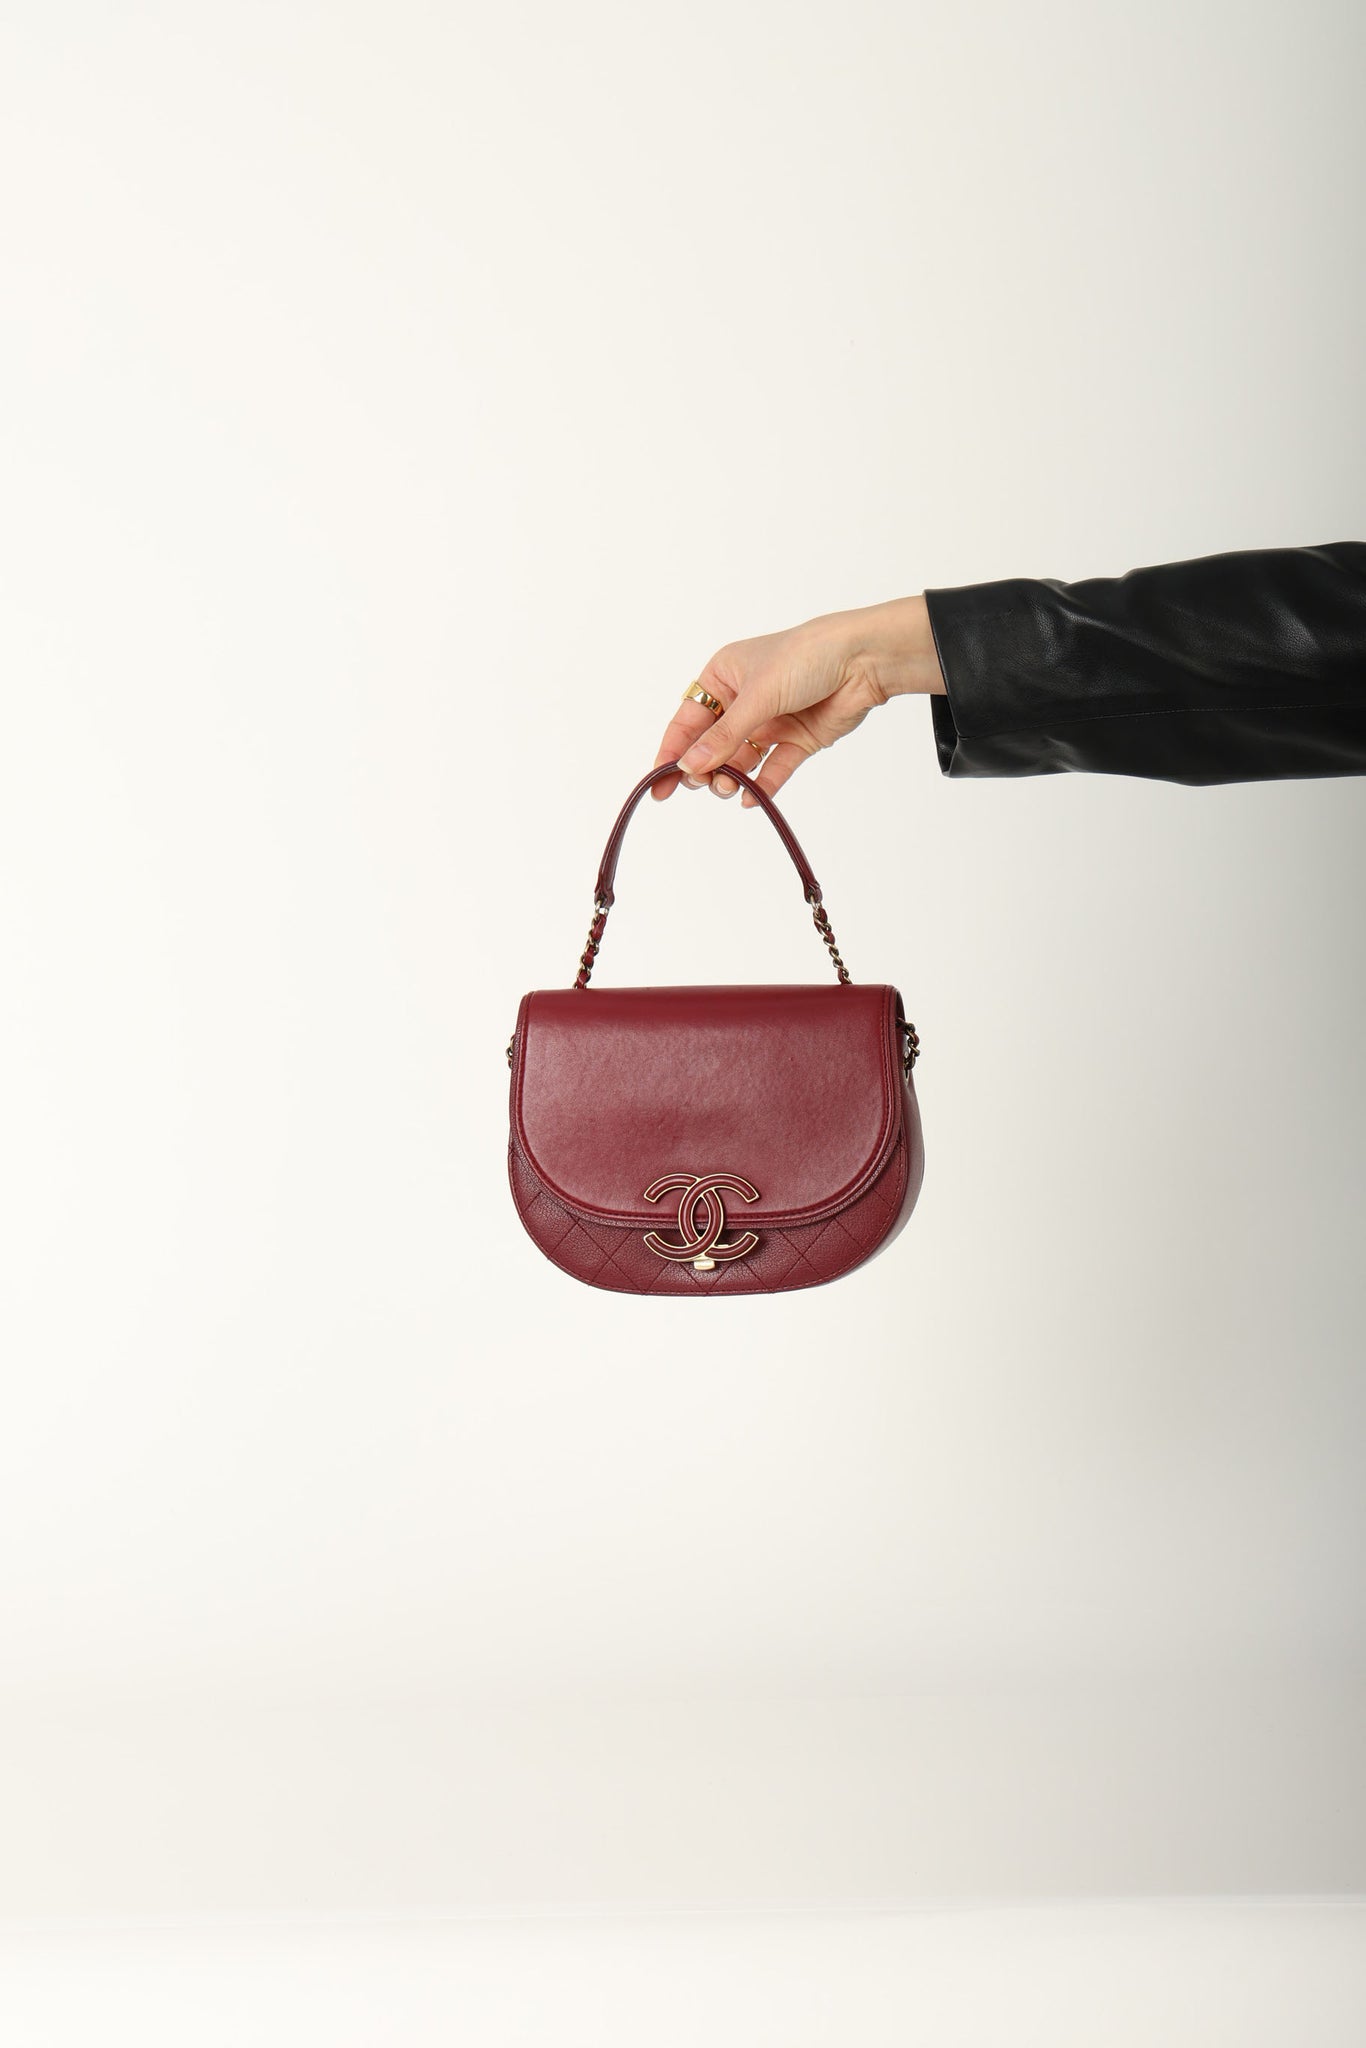 Chanel 2017 Calfskin Coco Curve Flap Bag